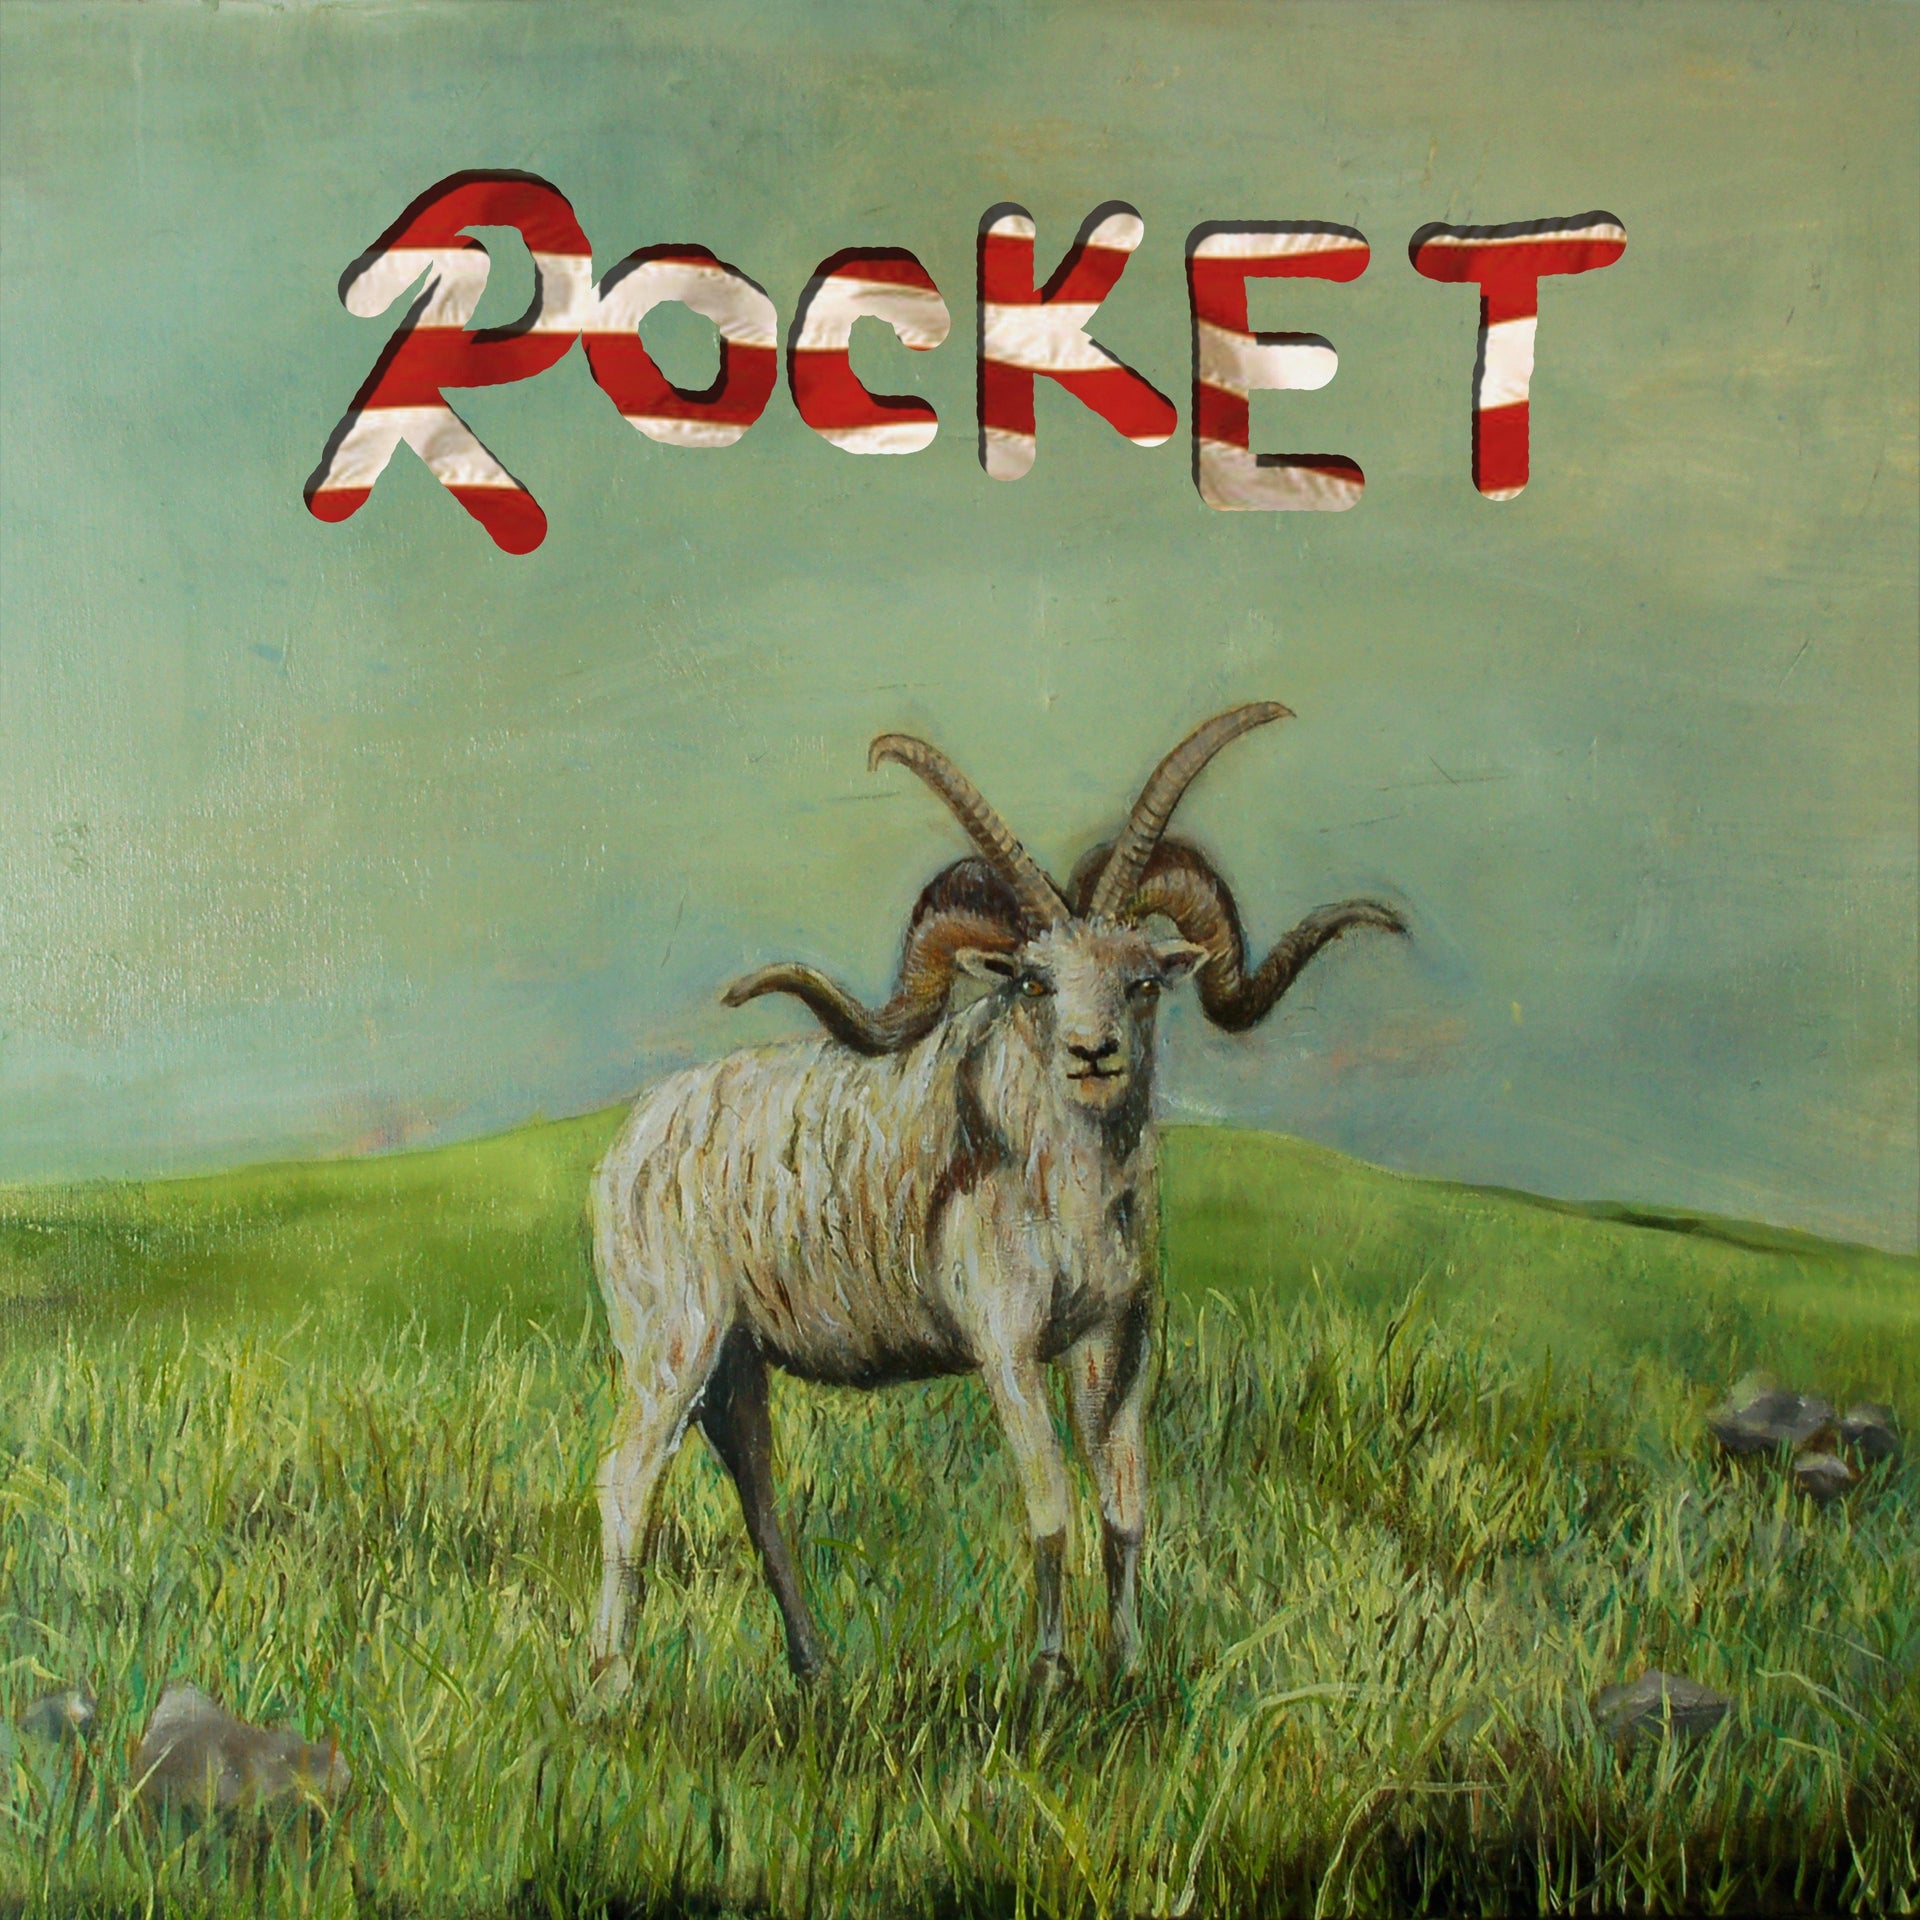 Buy – Alex G "Rocket" 12" – Band & Music Merch – Cold Cuts Merch